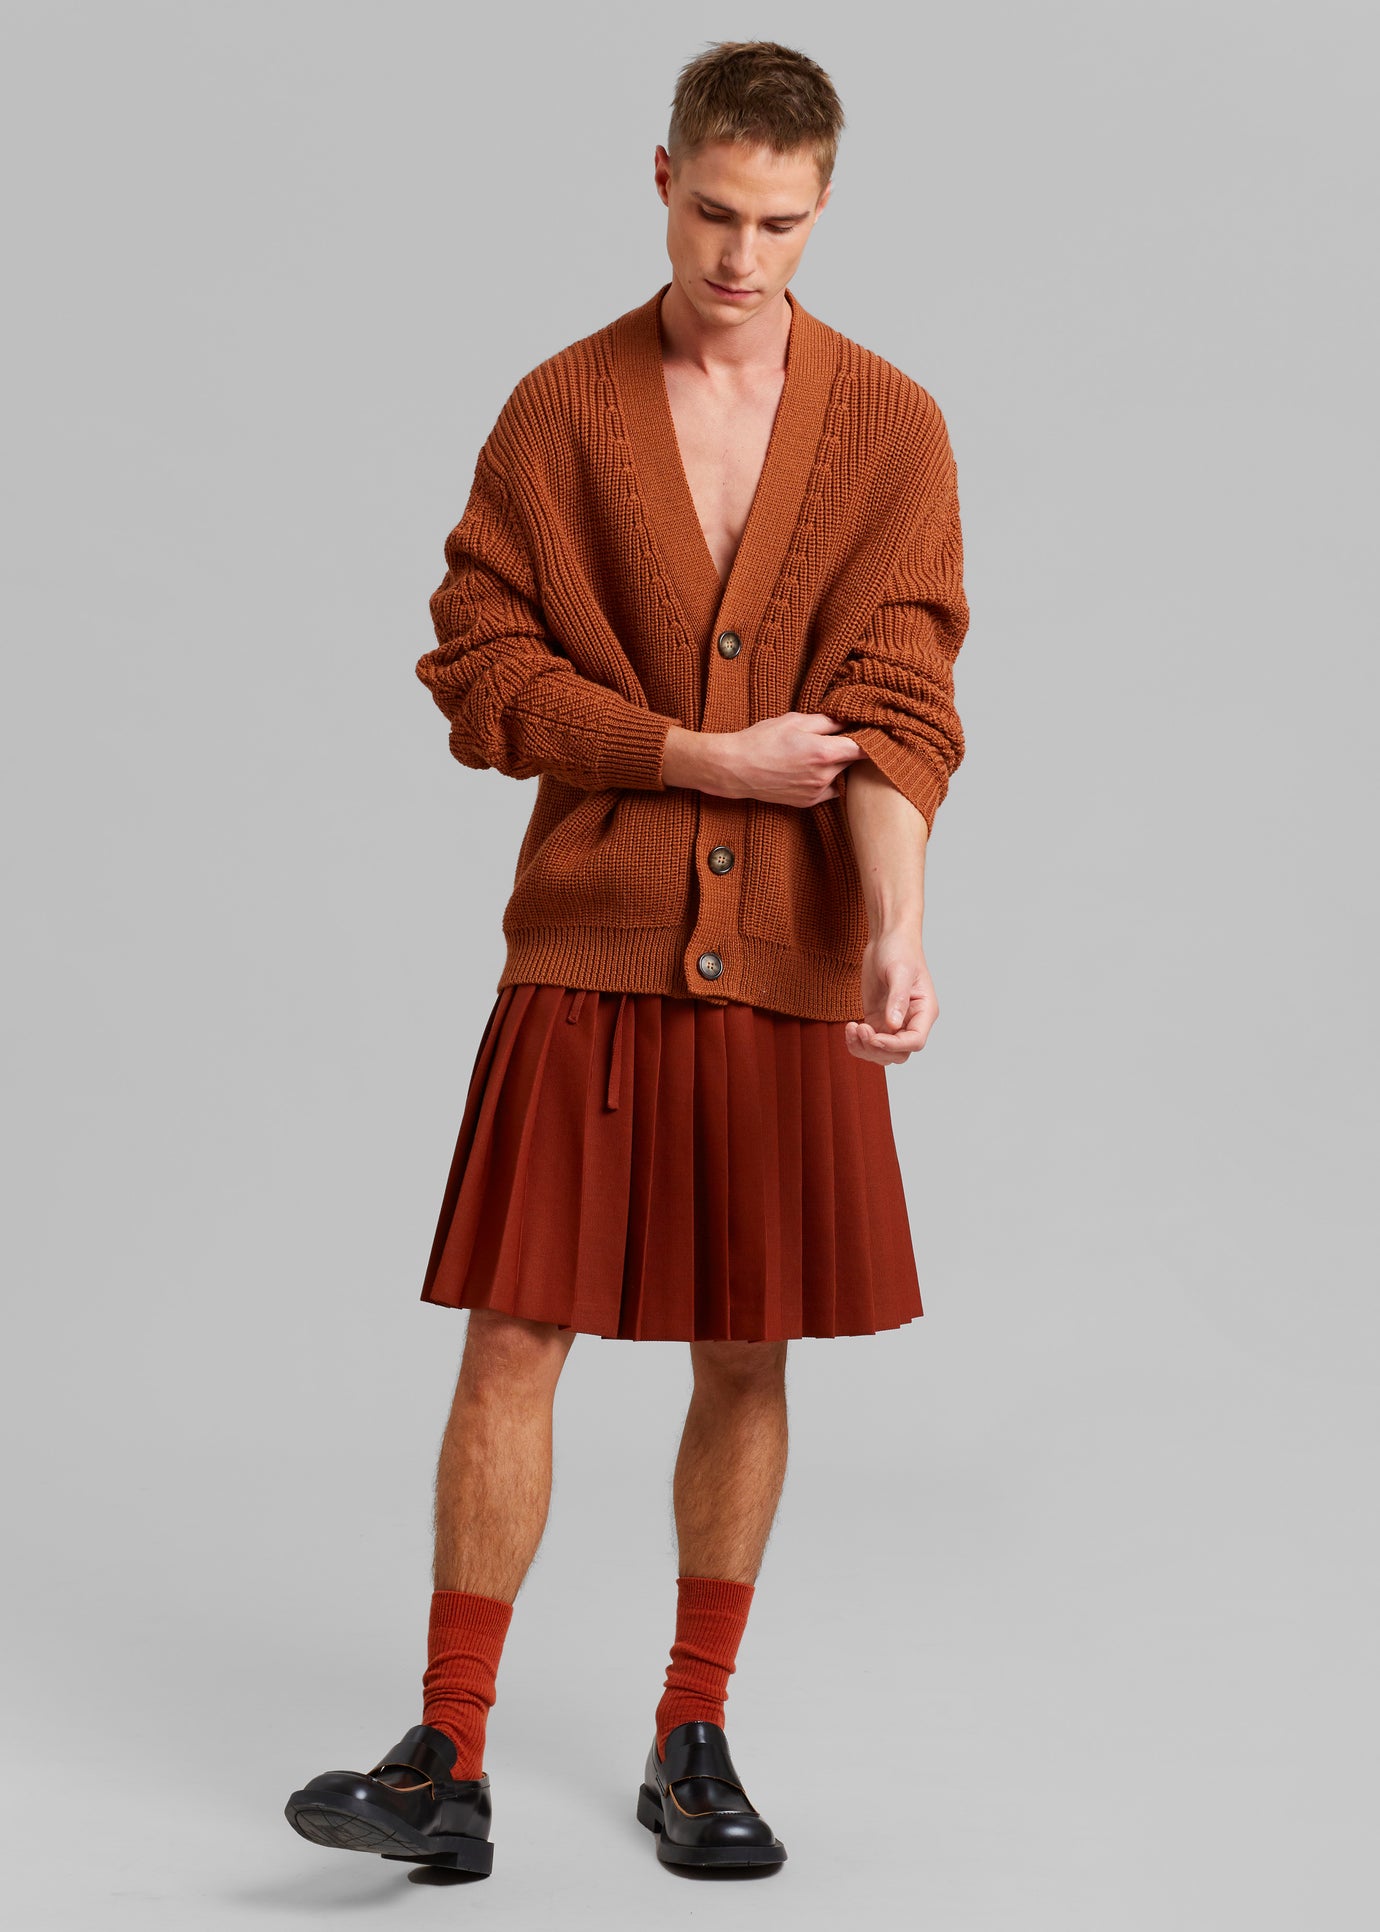 EGONLab Euphoria Skirt - Rust Wool